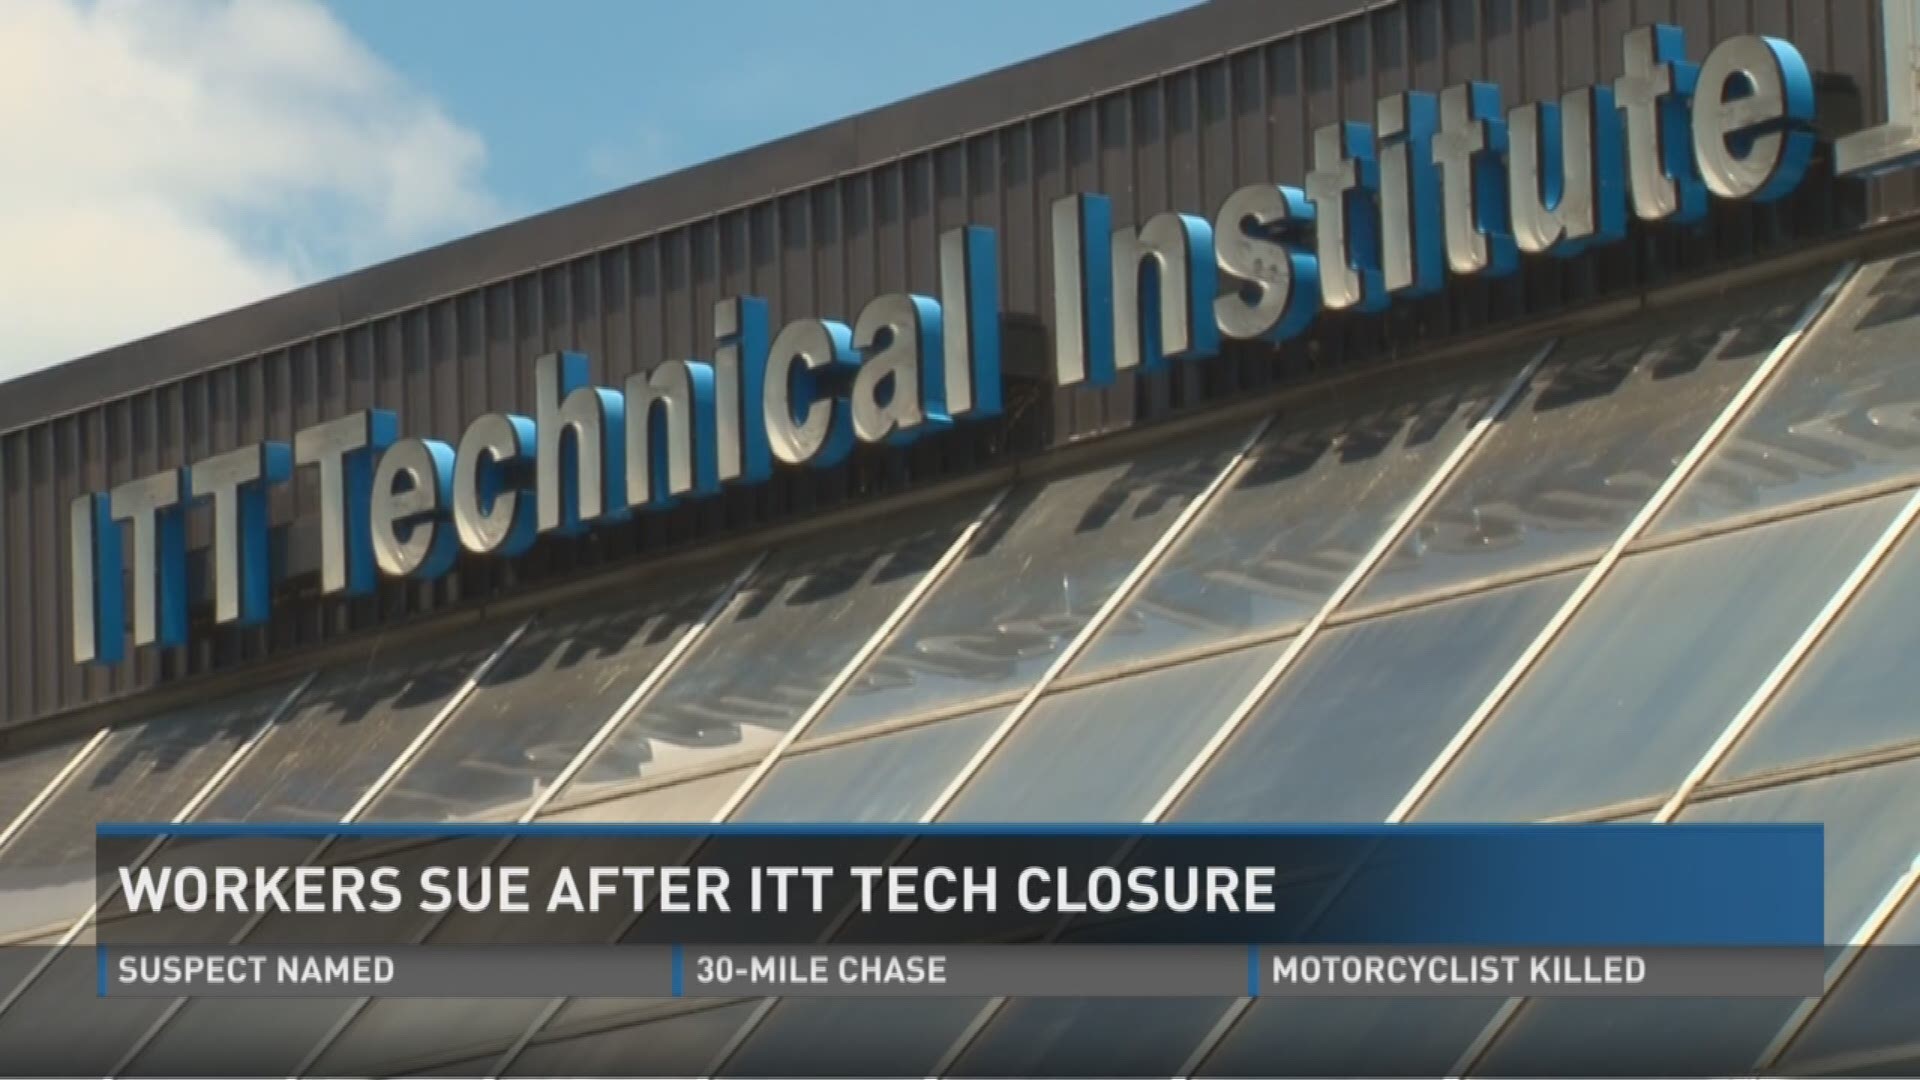 Employees file lawsuit against ITT Tech after closure